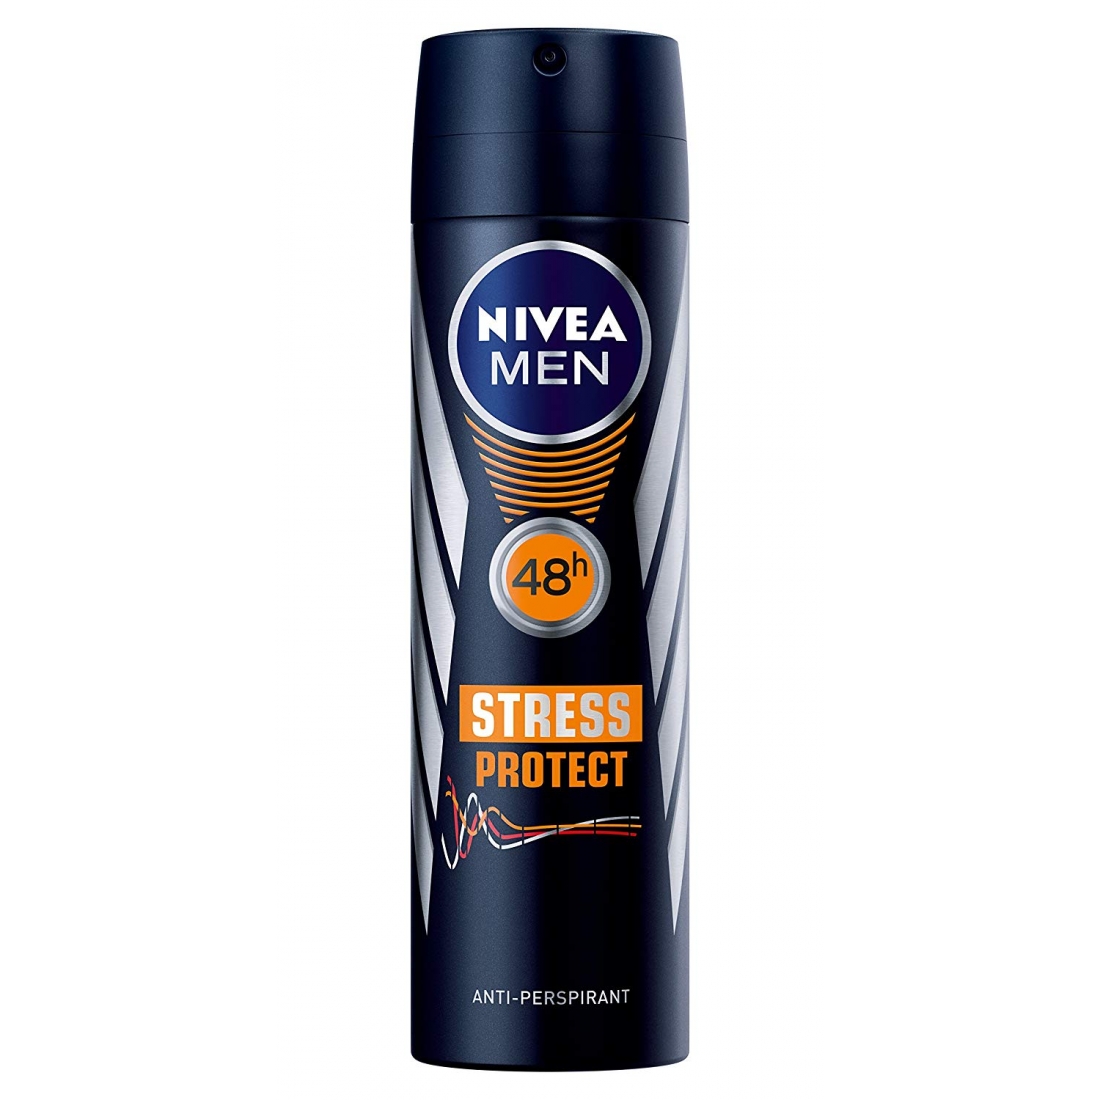 'Stress Protect' Spray Deodorant - 200 ml